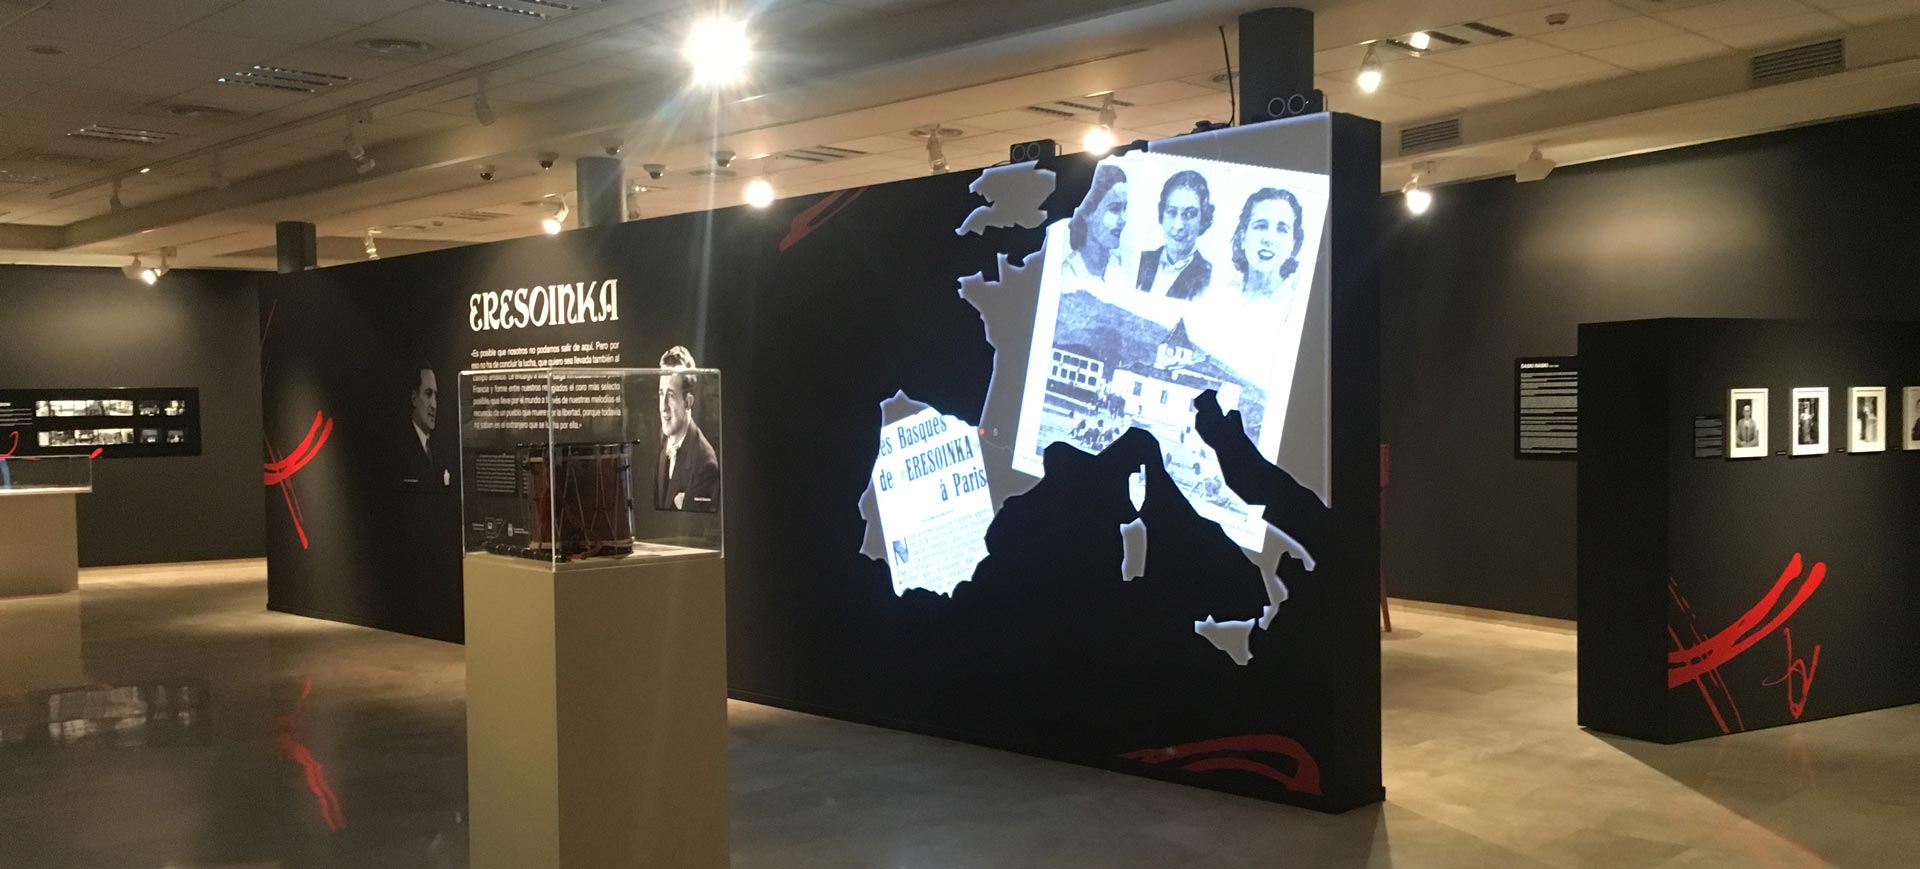 Imagen de la exposición Eresoinka para la capital cultural europea Donostia 2016.